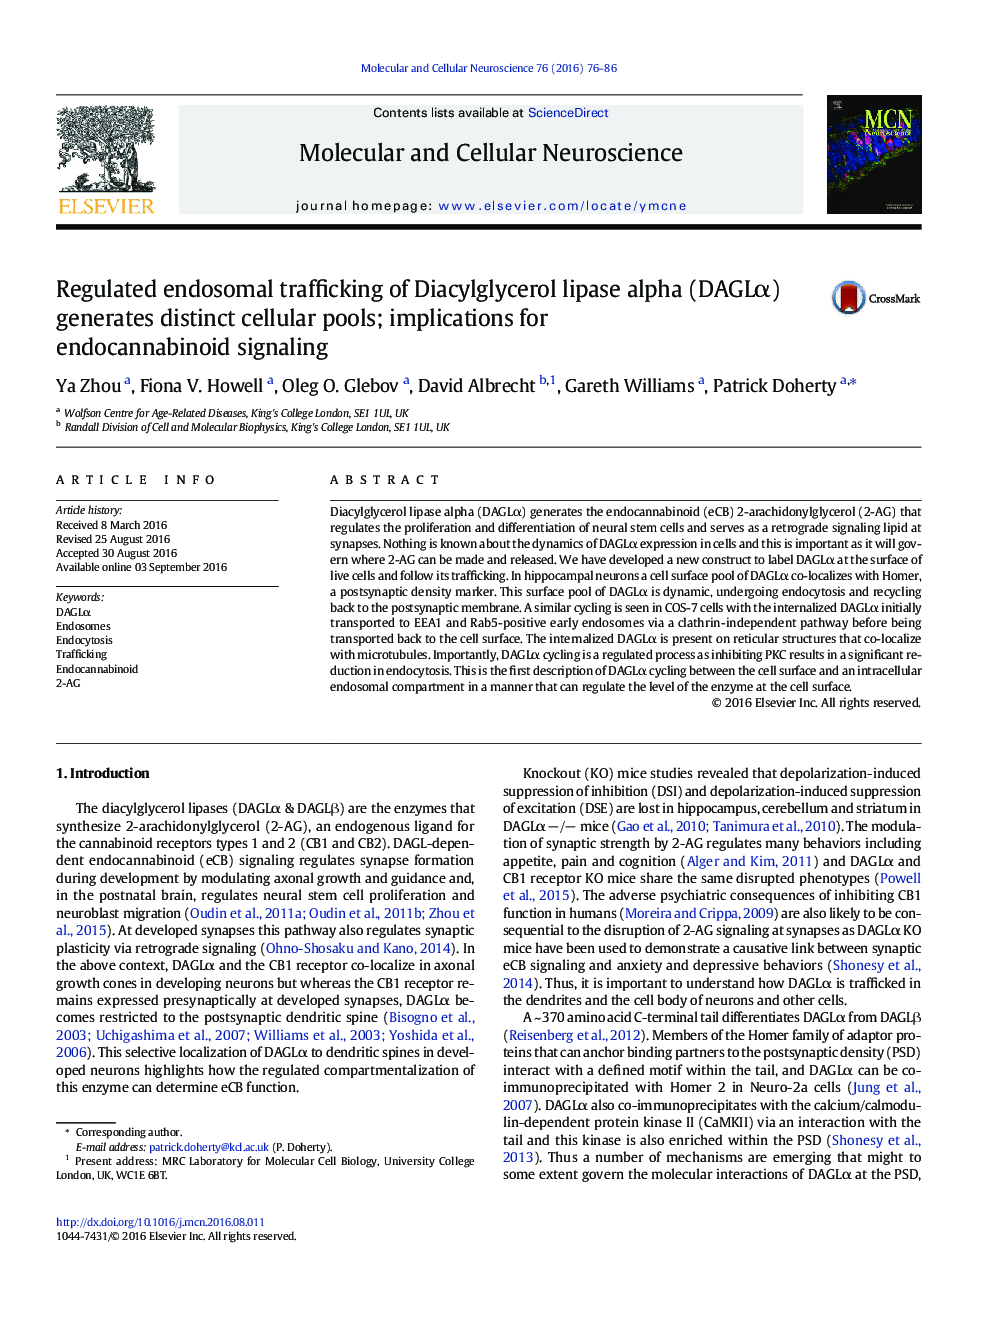 Regulated endosomal trafficking of Diacylglycerol lipase alpha (DAGLÎ±) generates distinct cellular pools; implications for endocannabinoid signaling